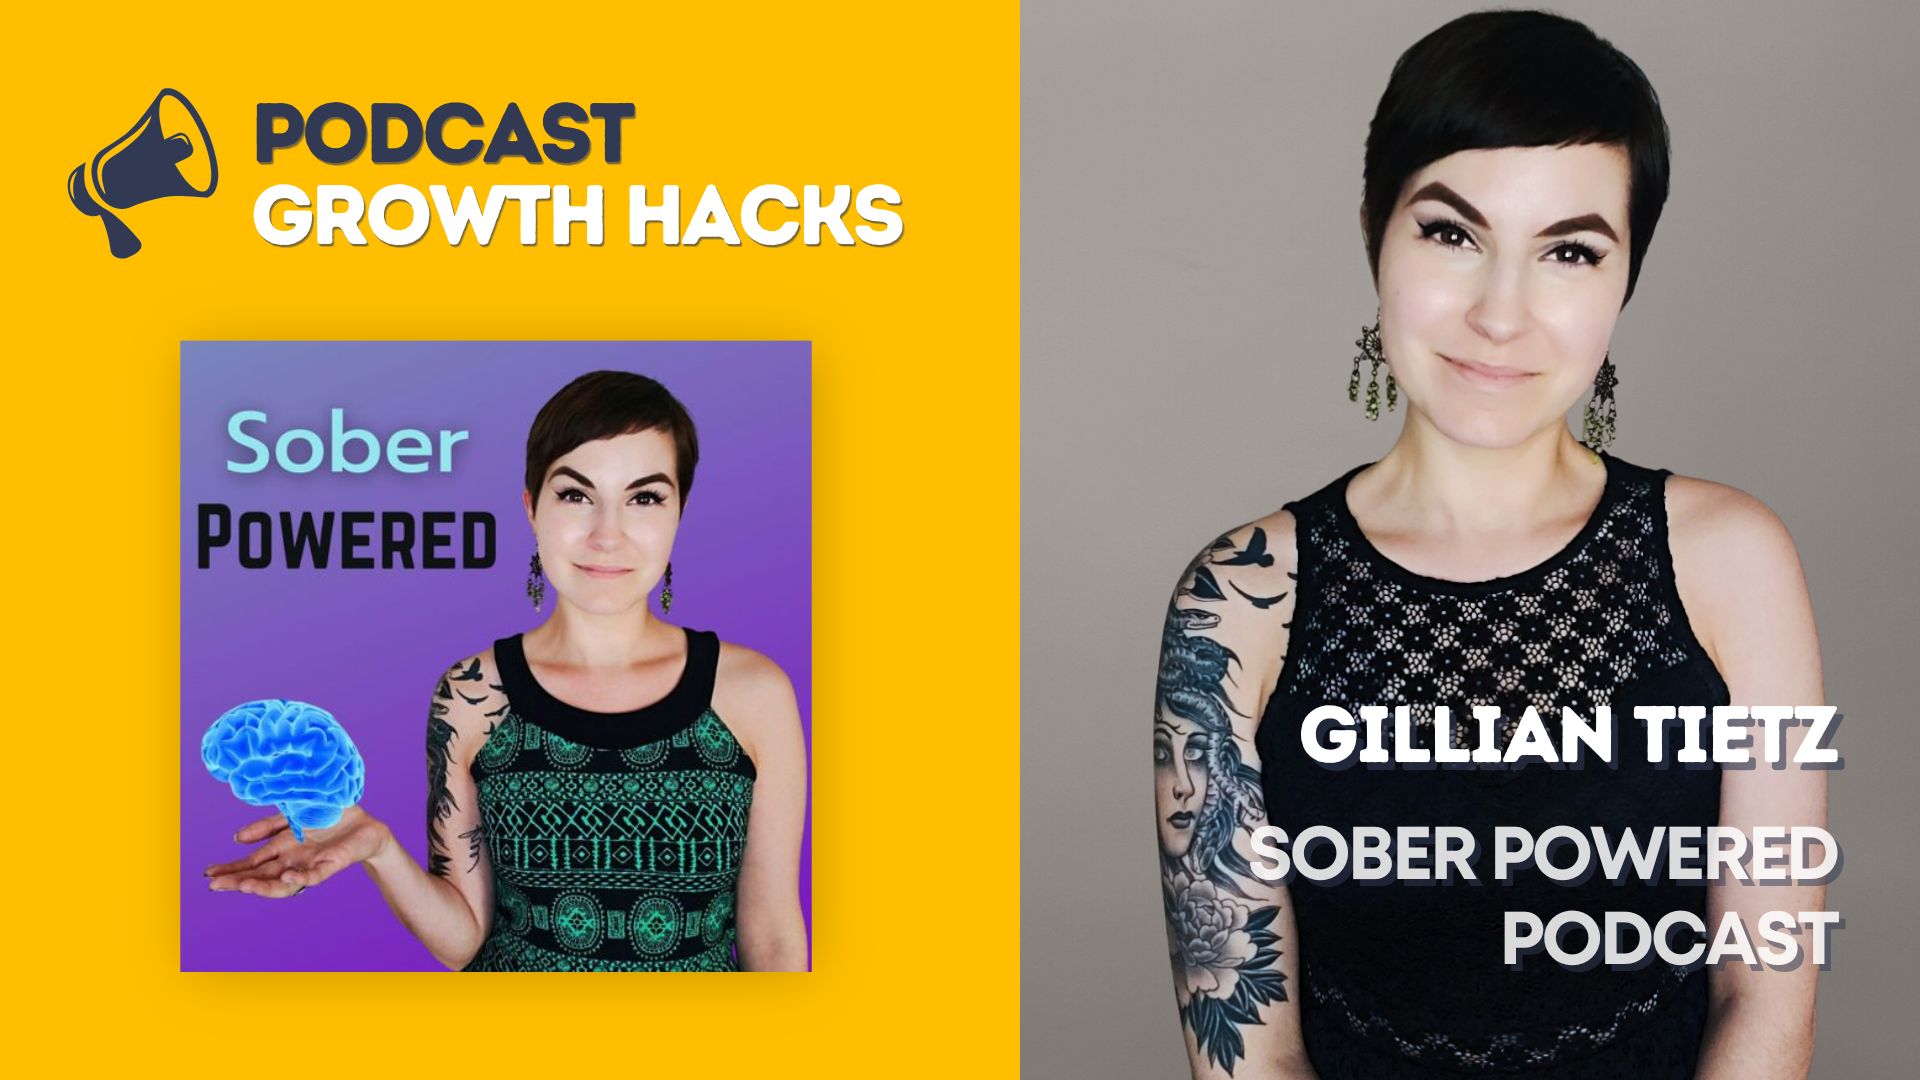 Gillian Tietz - Sober Powered Podcast - Podcast Growth Hacks